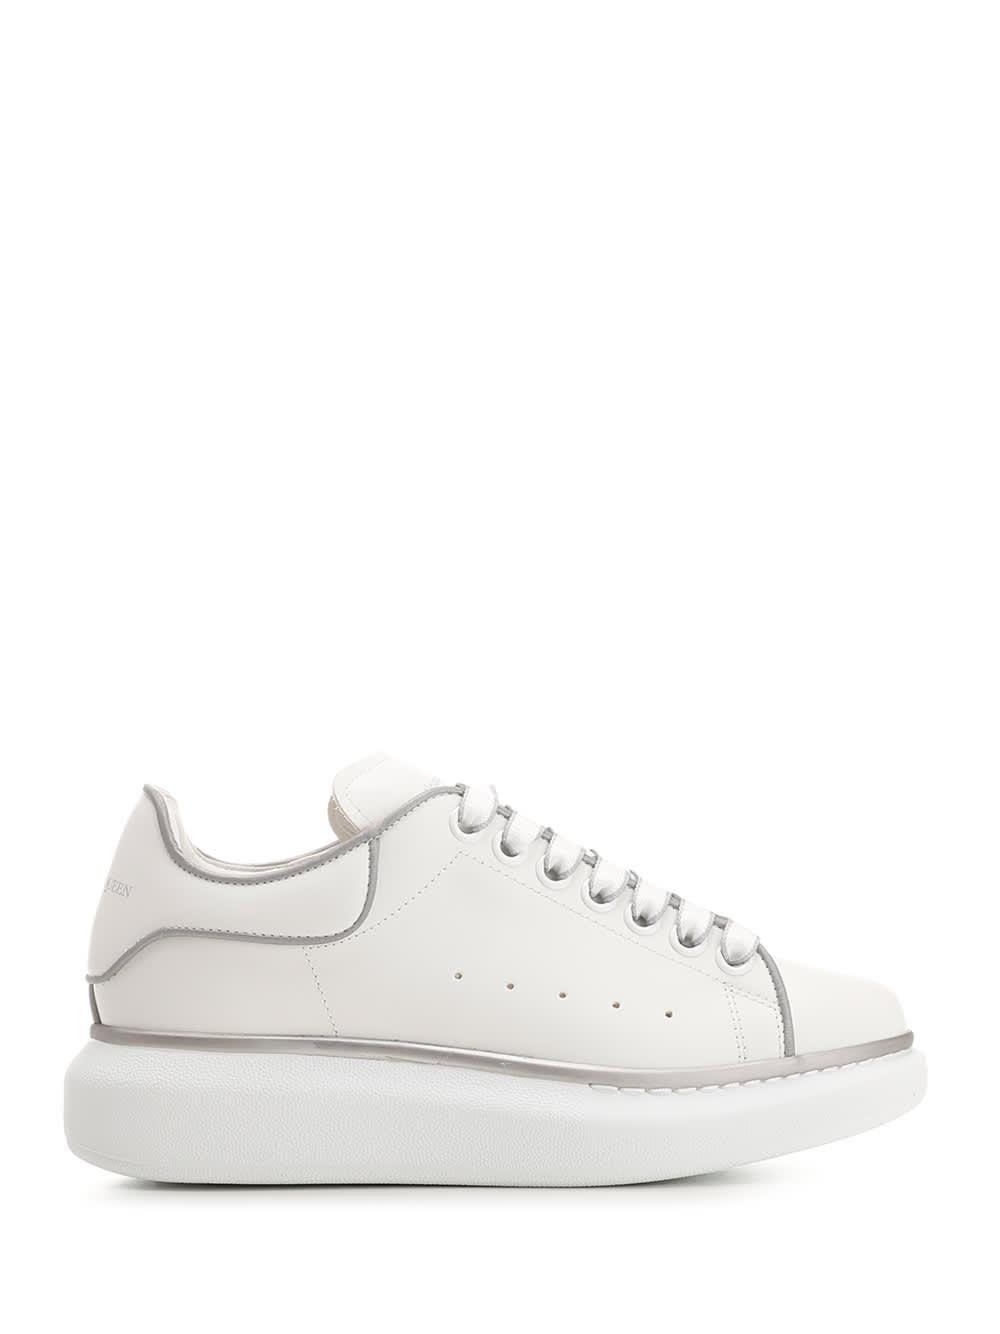 Alexander Mcqueen Oversize Sneaker In White/silver